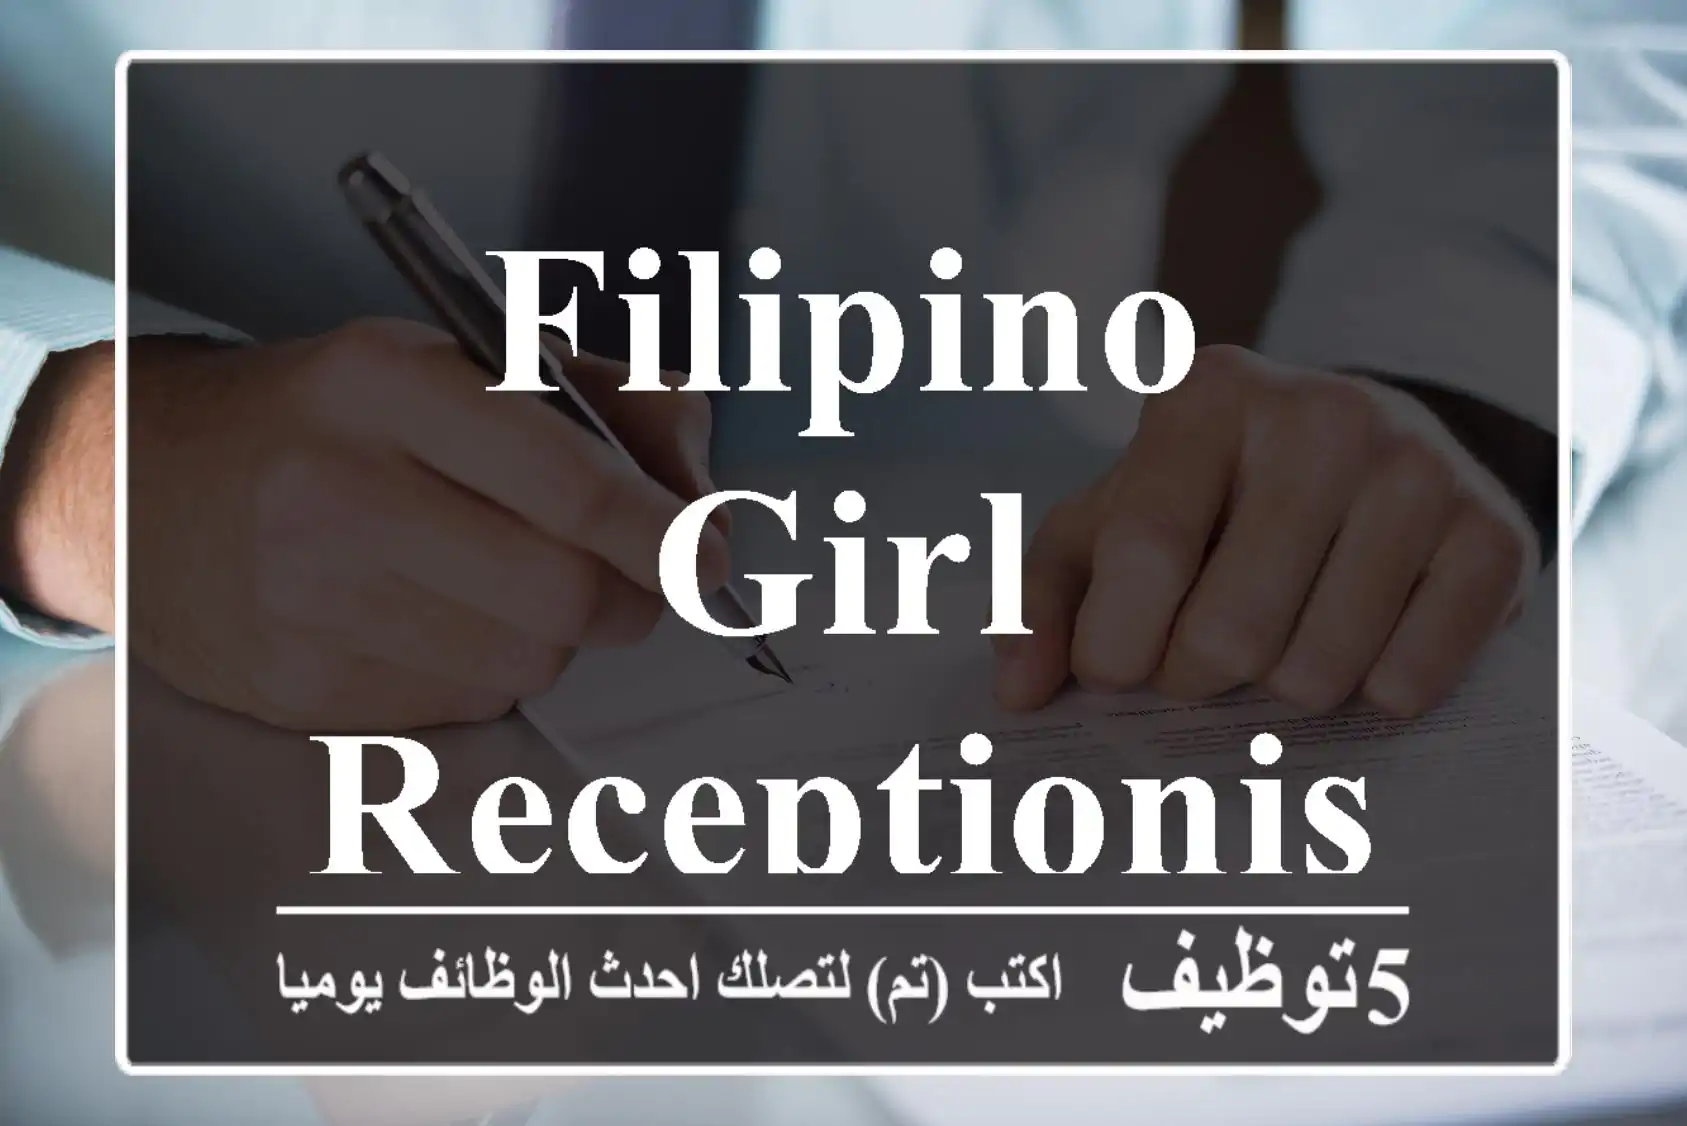 Filipino girl receptionist